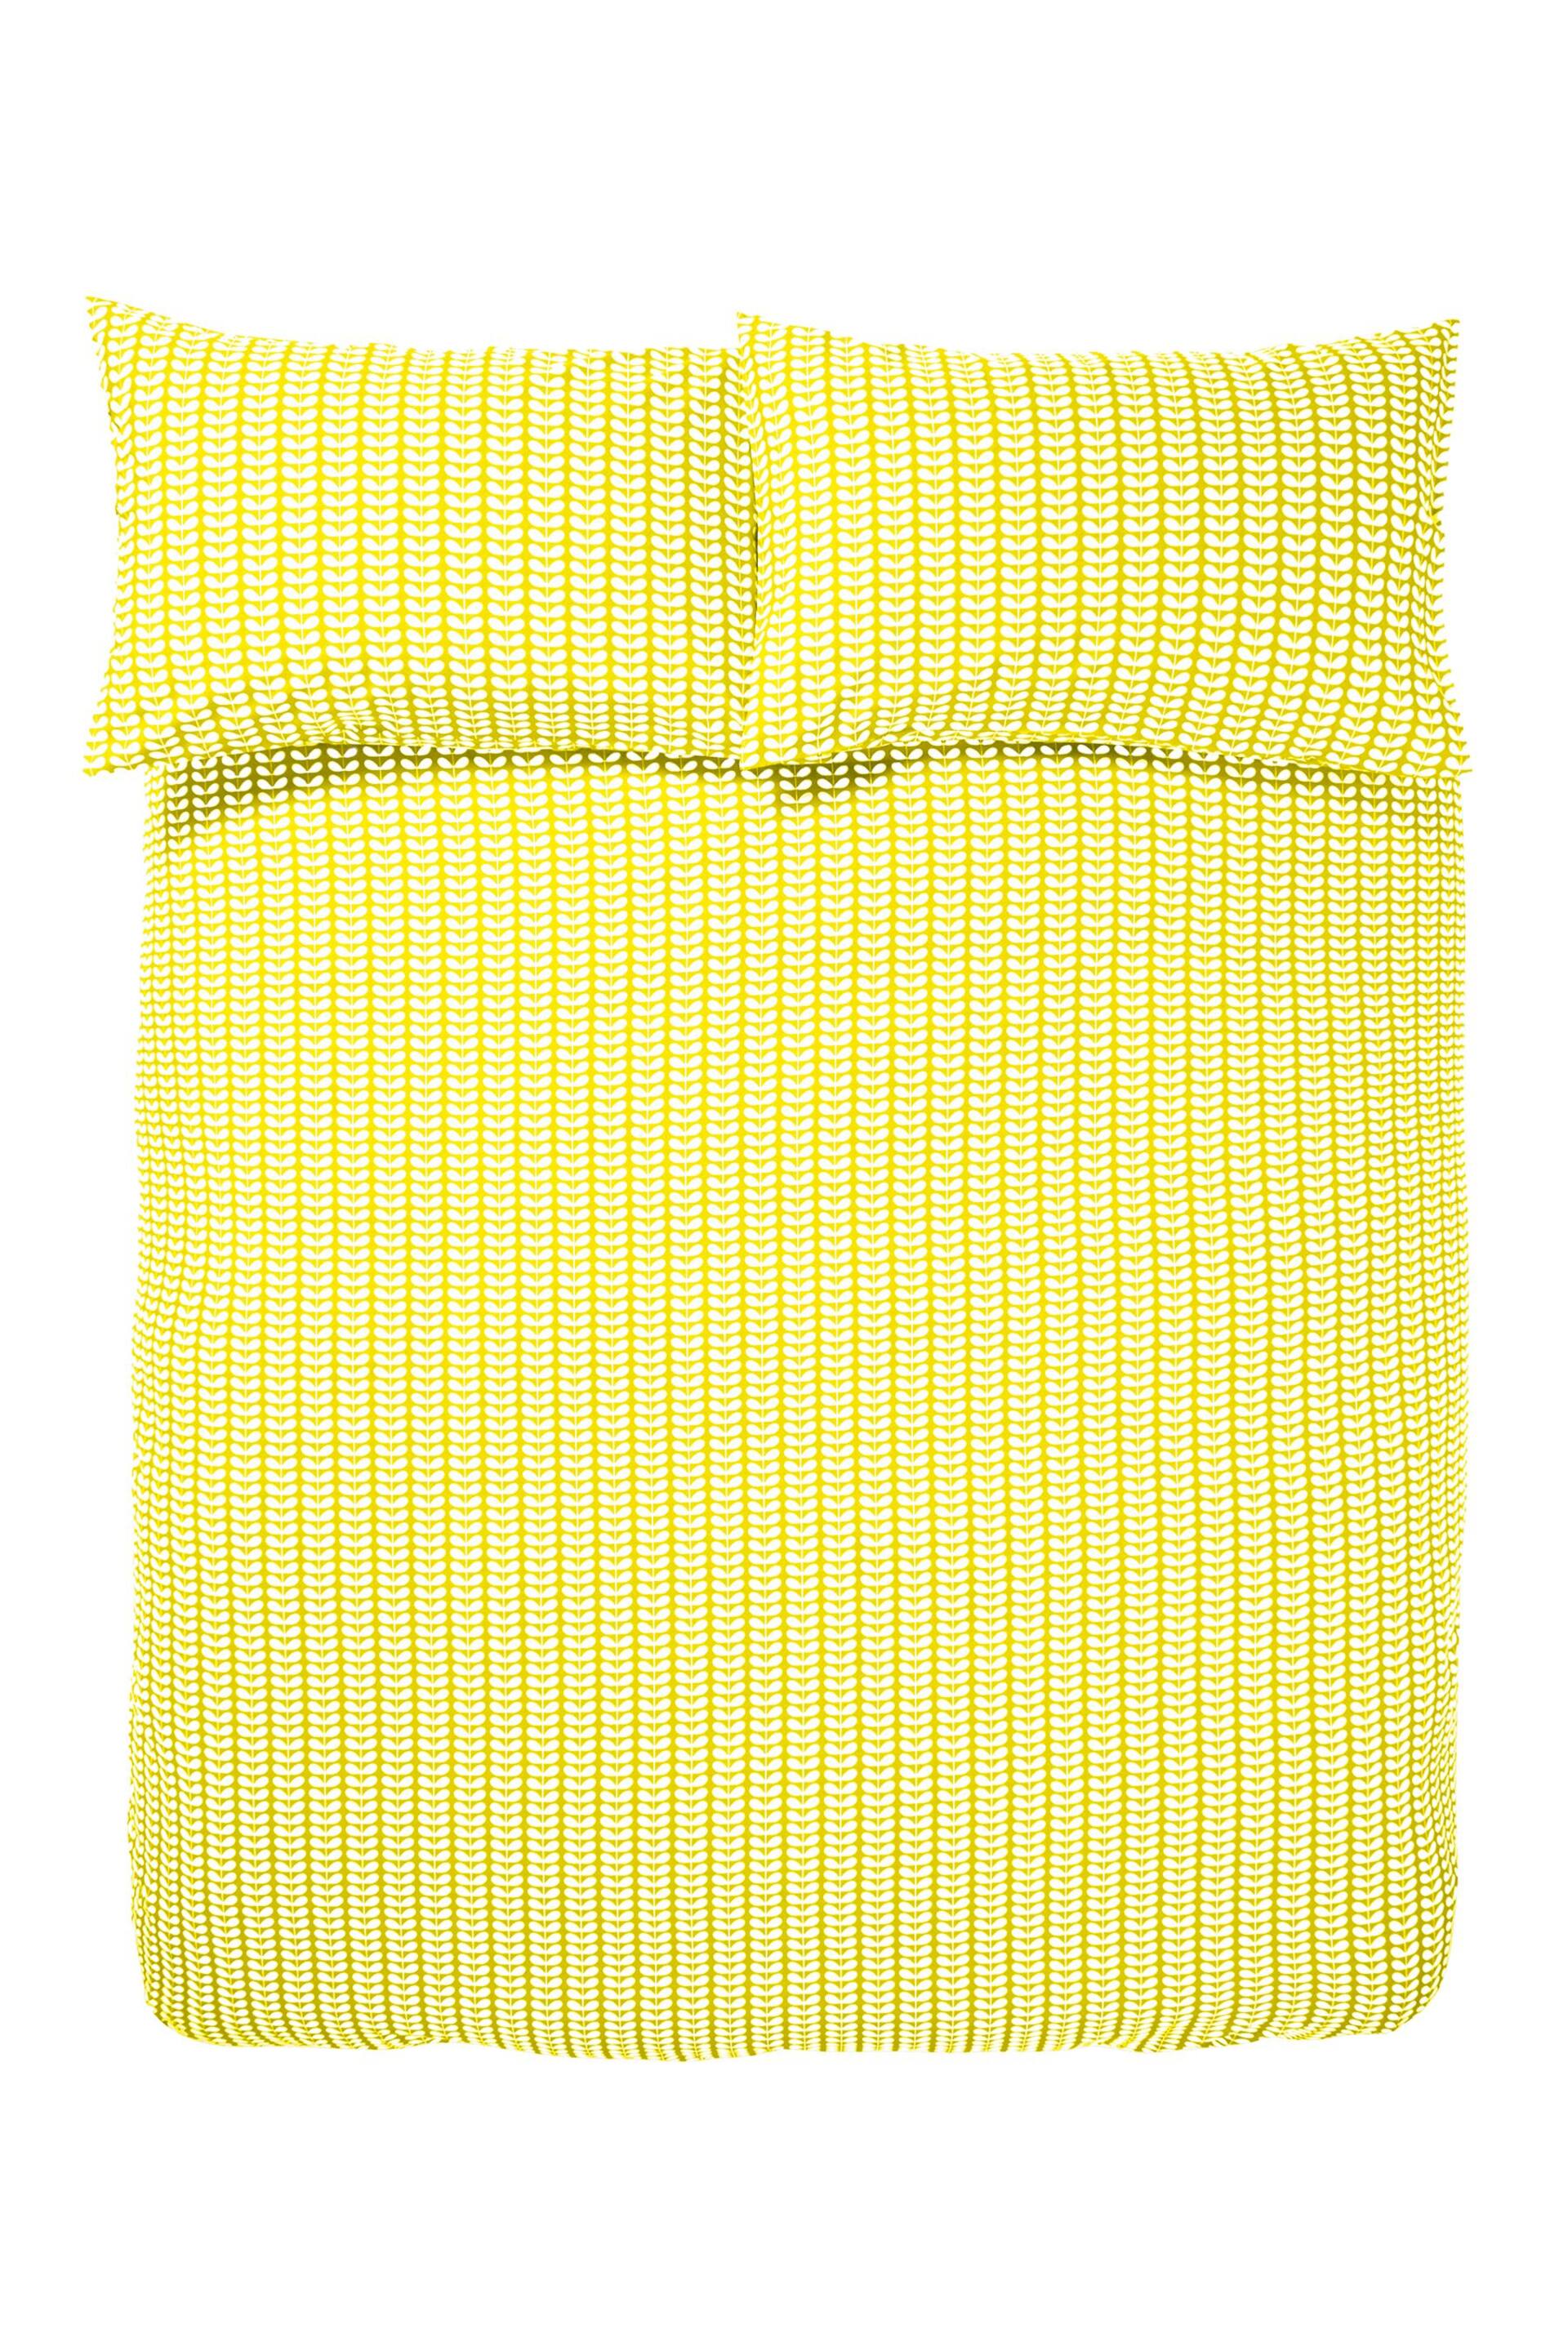 Orla Kiely Yellow Tiny Stem Duvet Cover and Pillowcase Set - Image 3 of 4